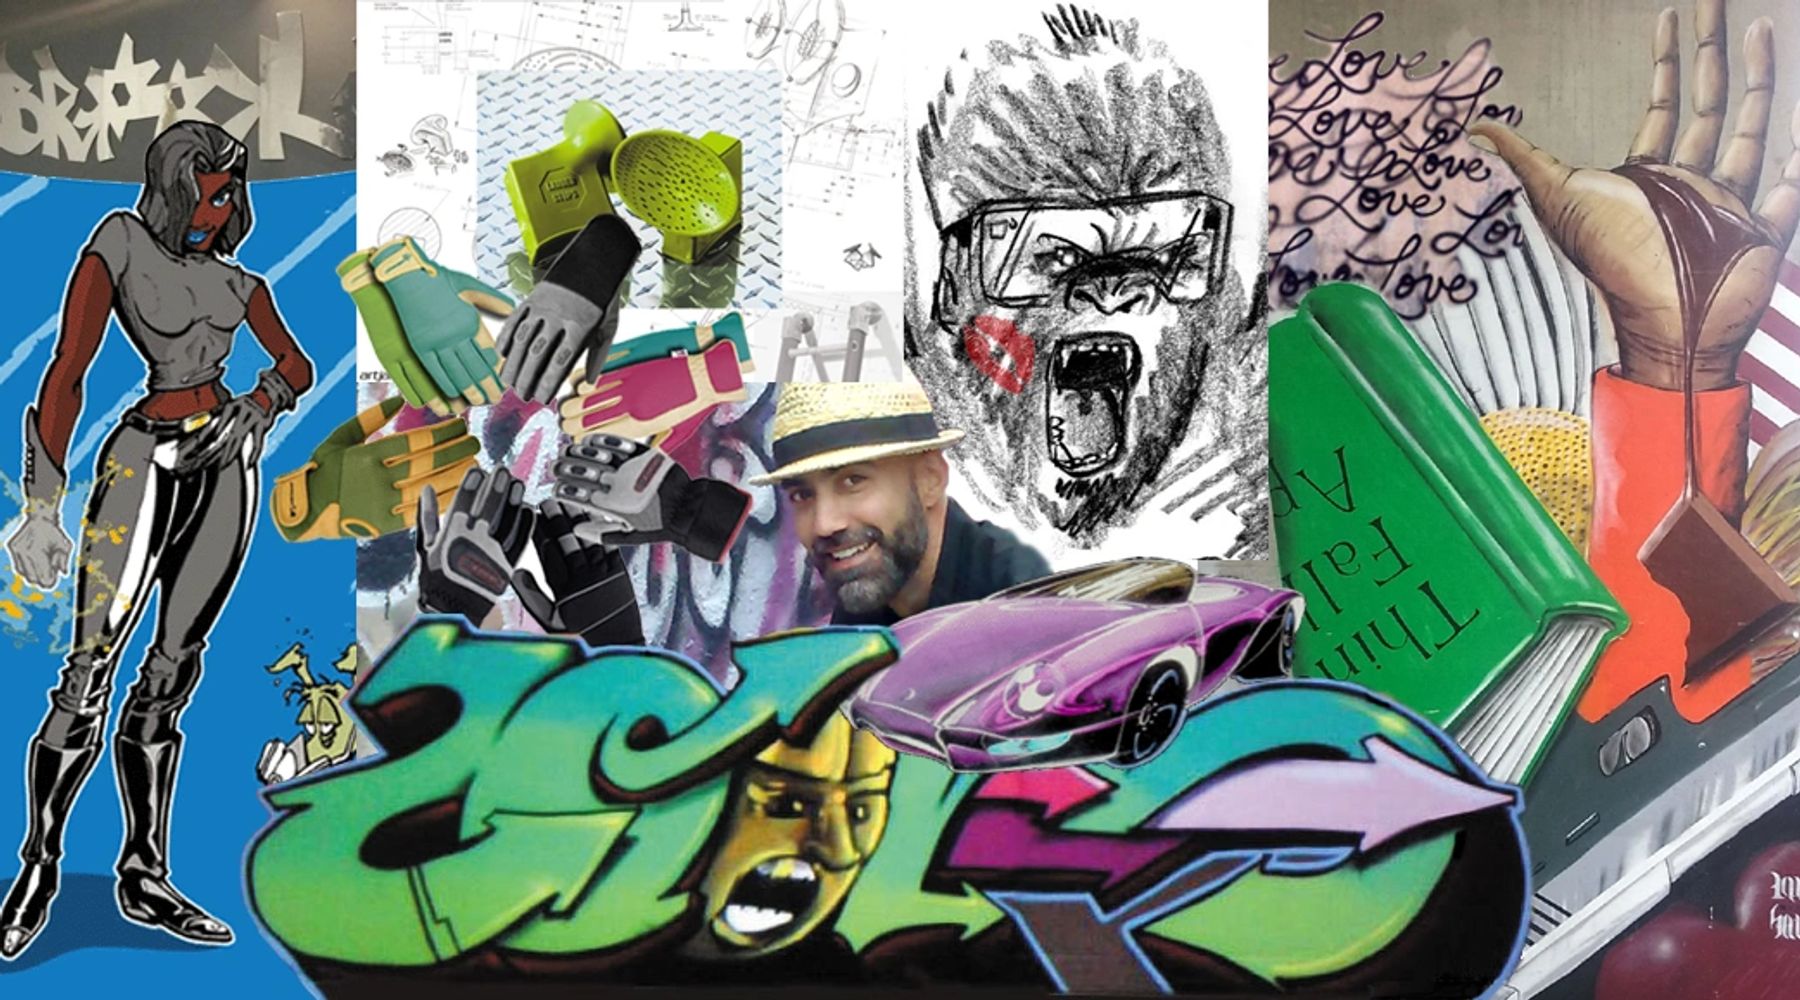 graffiti art, comic book illustrator, cartoon, mural, industrial design, calligraphy, car styling 